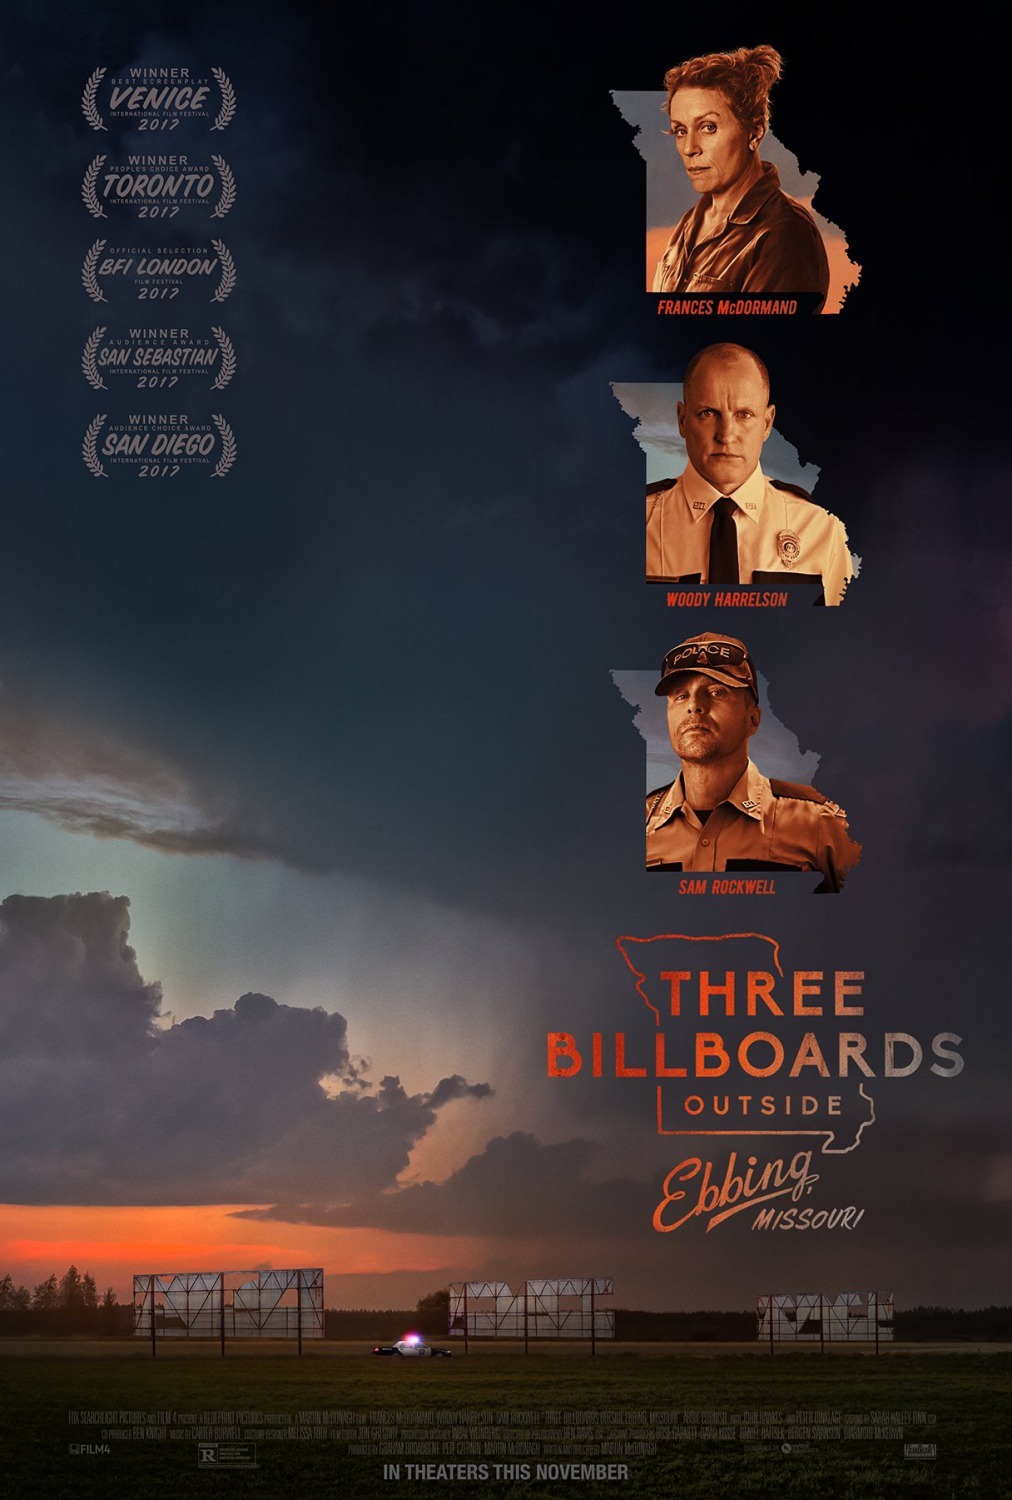 Nonton film Three Billboards Outside Ebbing Missouri layarkaca21 indoxx1 ganool online streaming terbaru